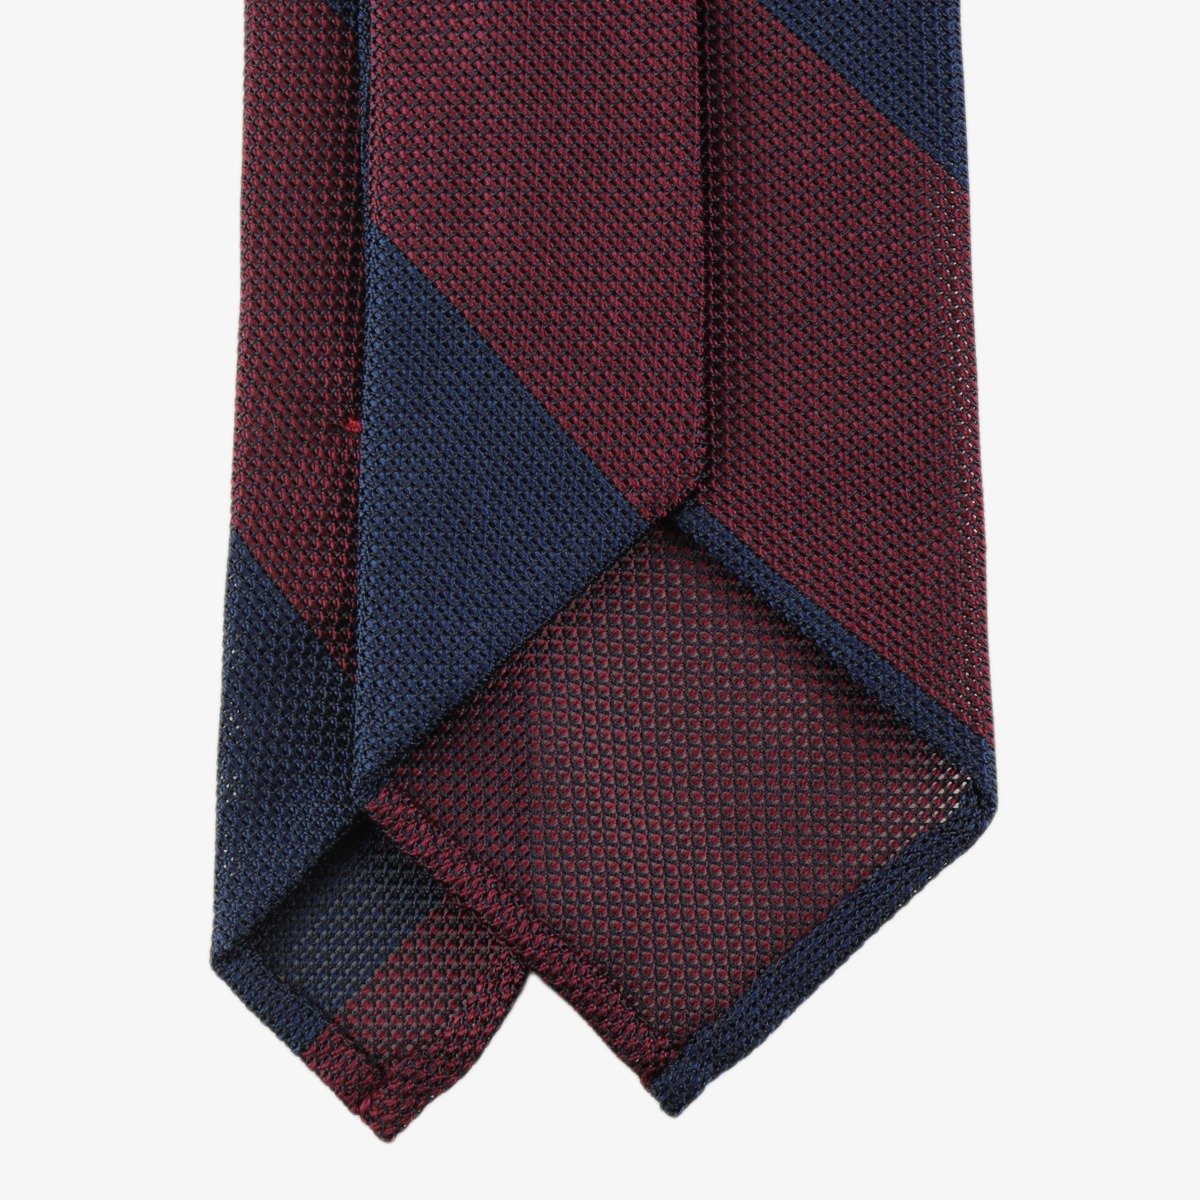 Shibumi Firenze Navy and burgundy block stripe grenadine silk tie